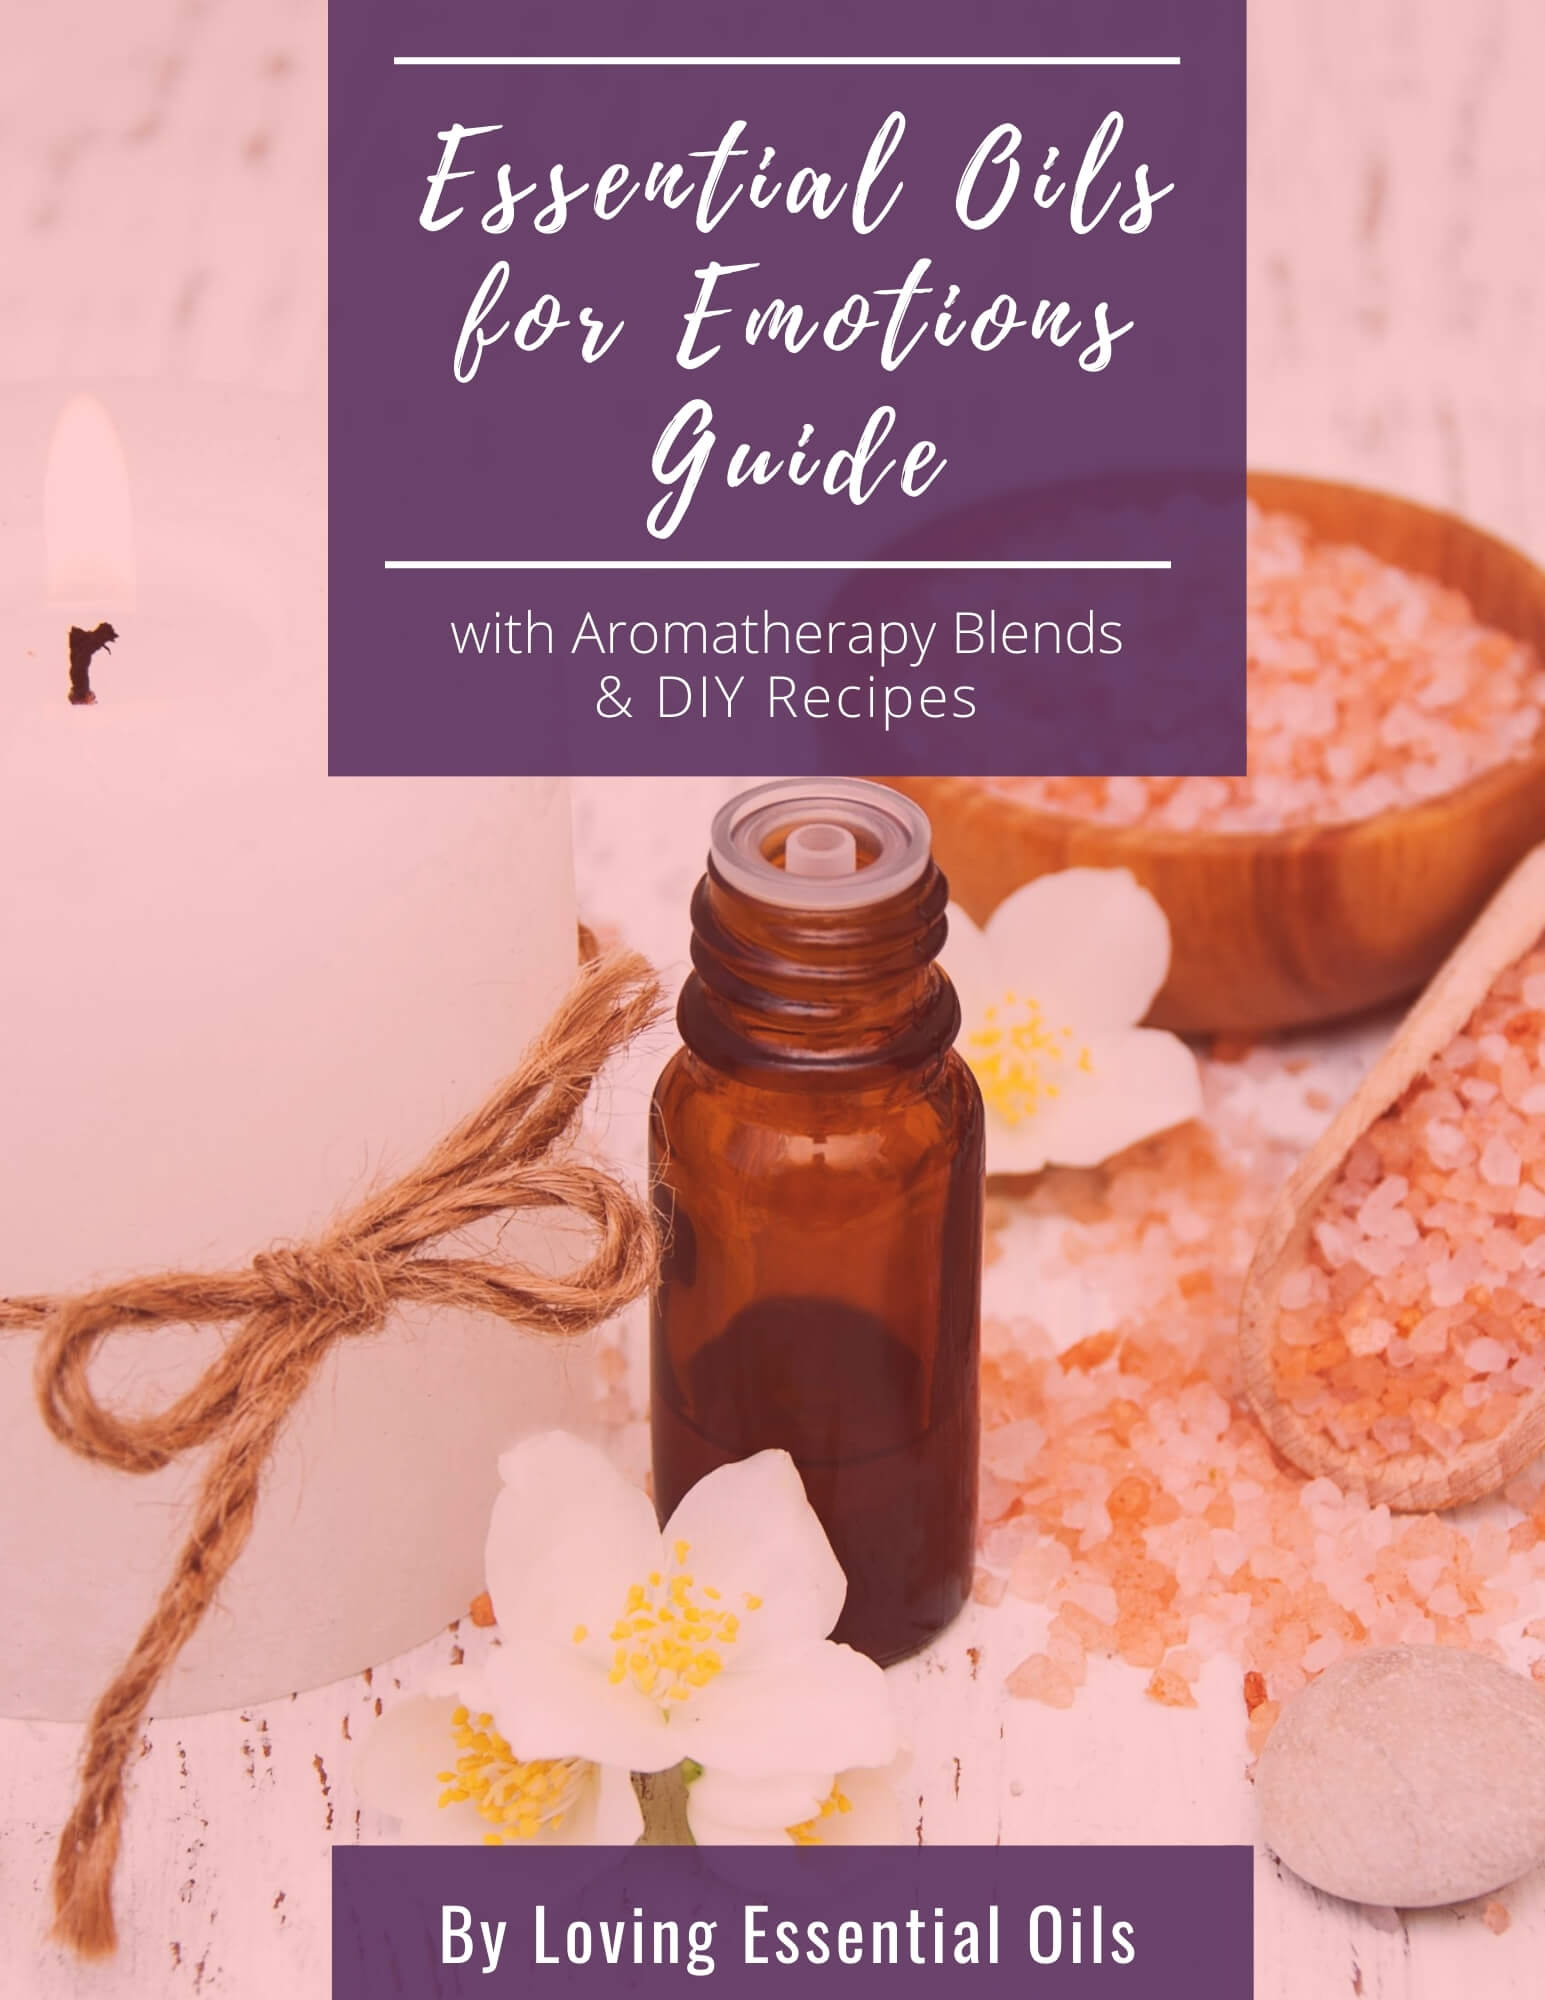 DIY Essential Oil Recipes for Emotions by Loving Essential Oils